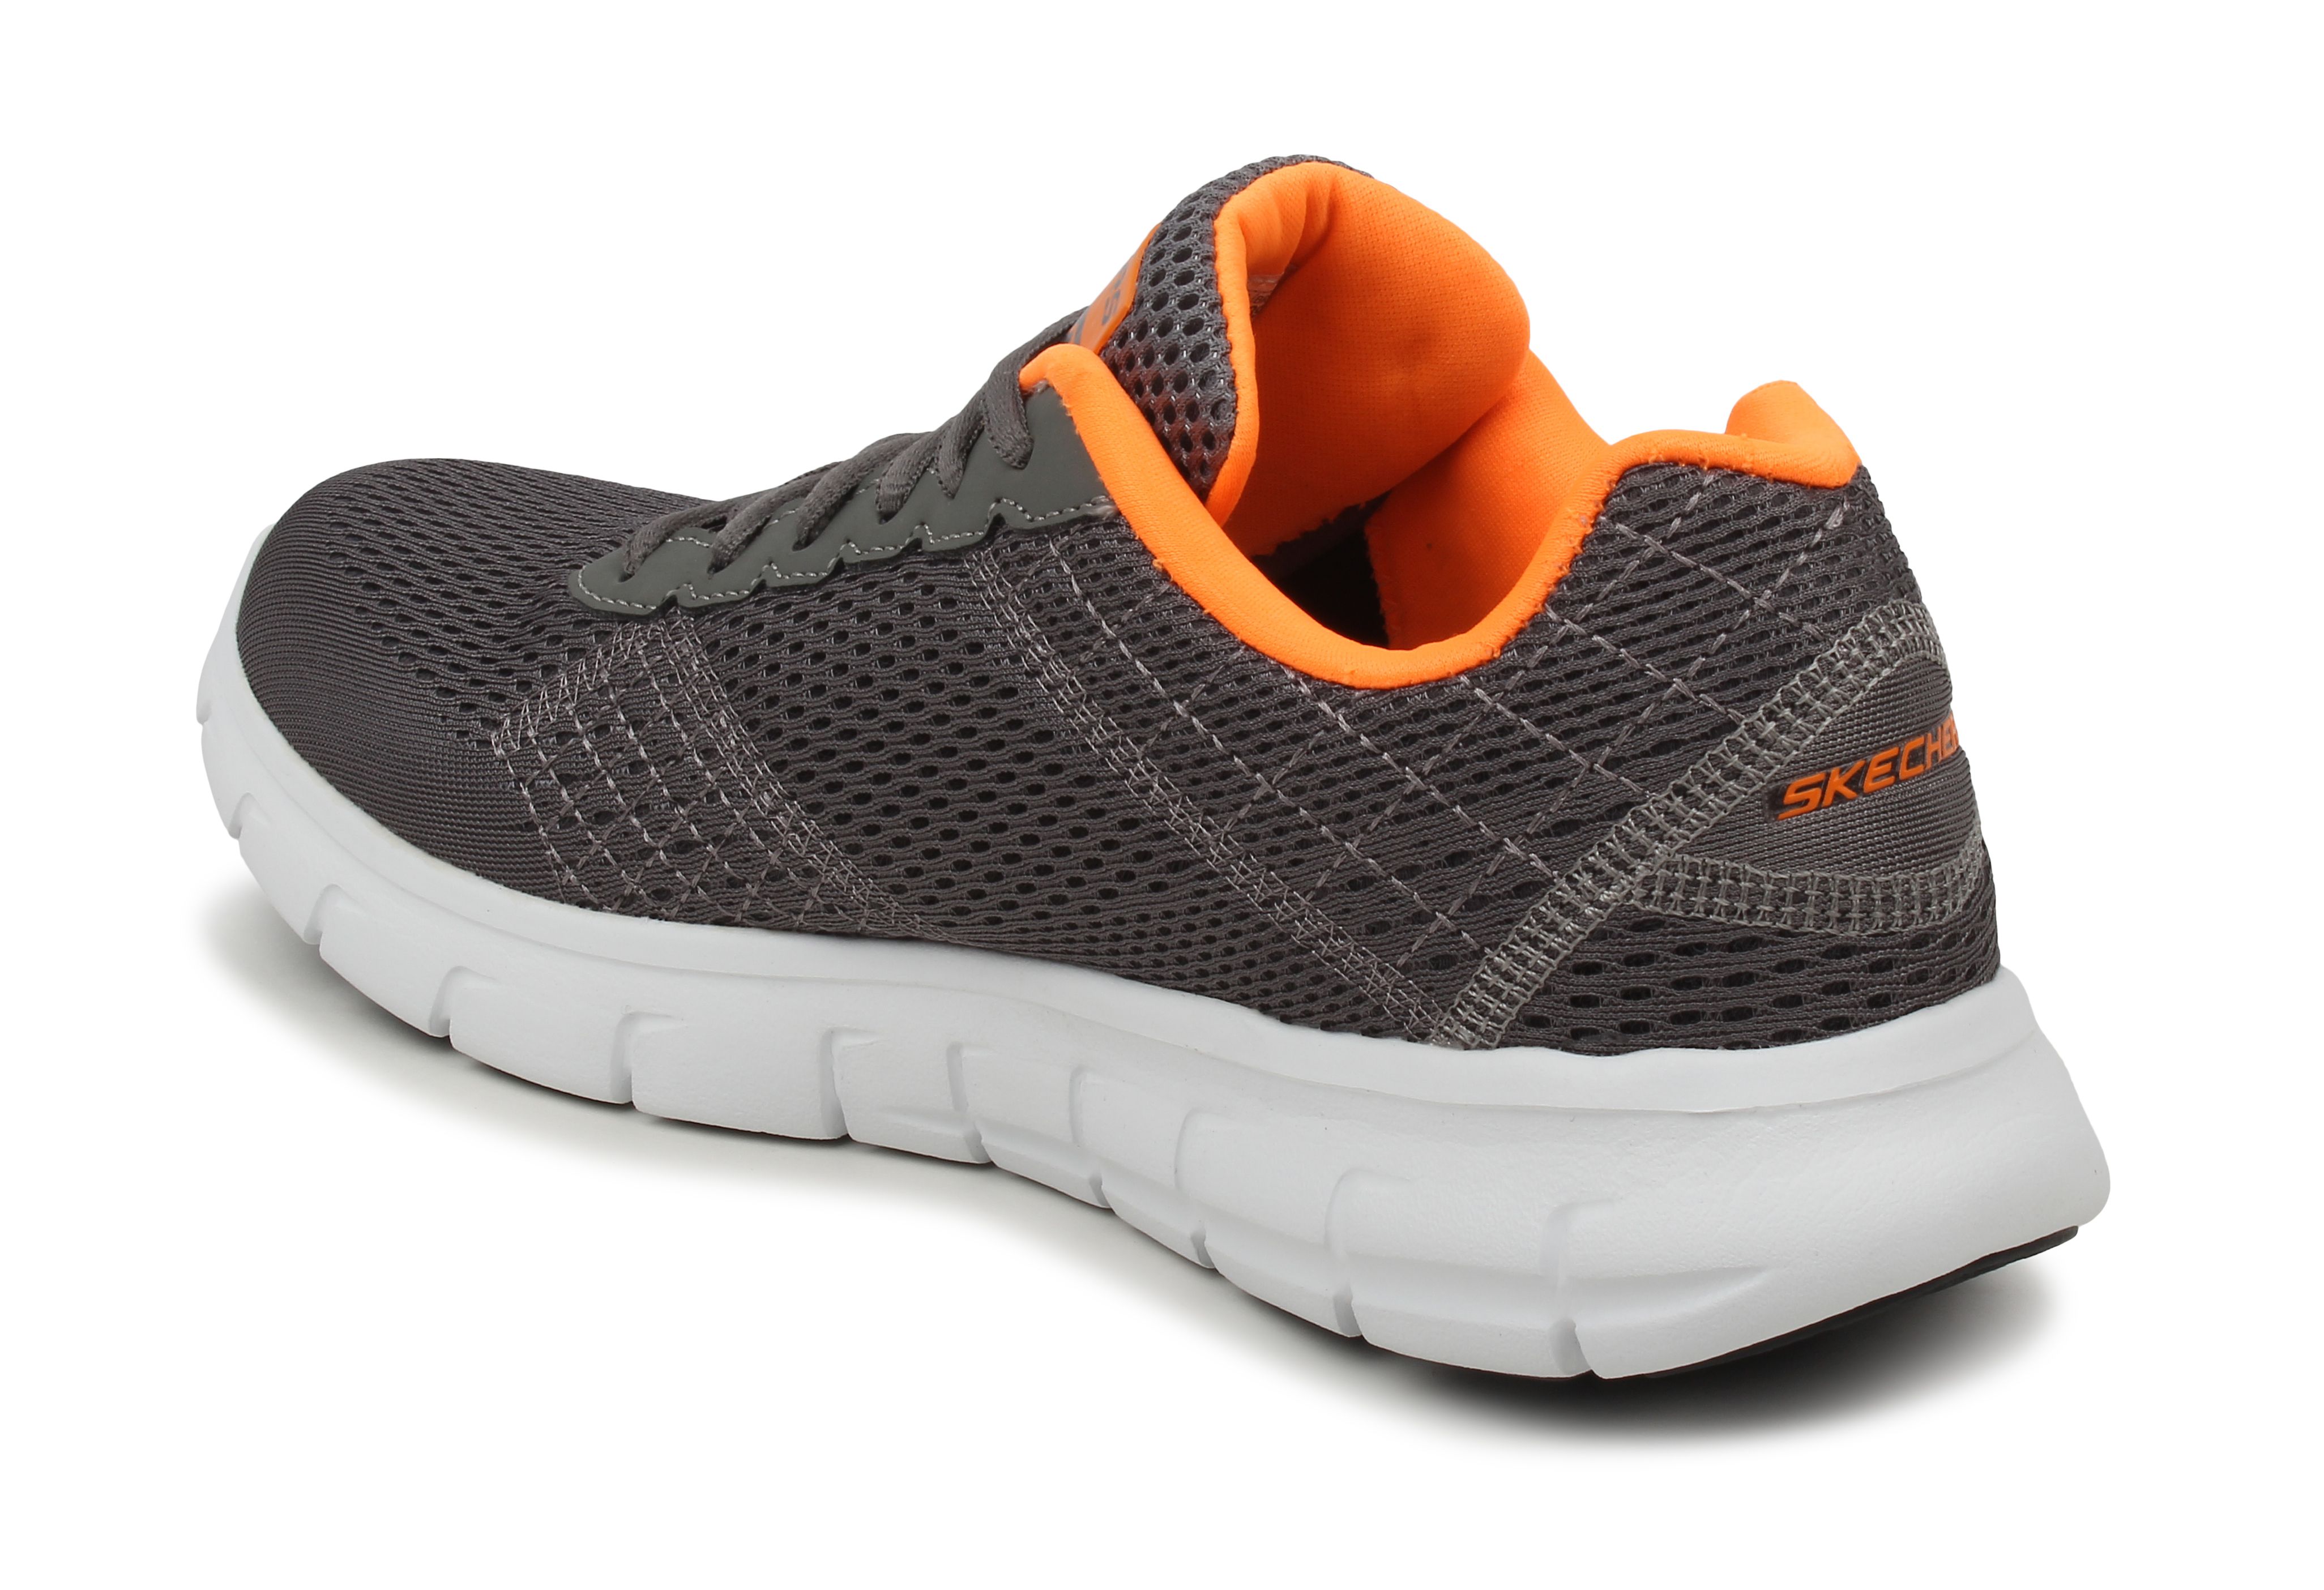 Skechers Orange Running Shoes - Buy Skechers Orange Running Shoes ...